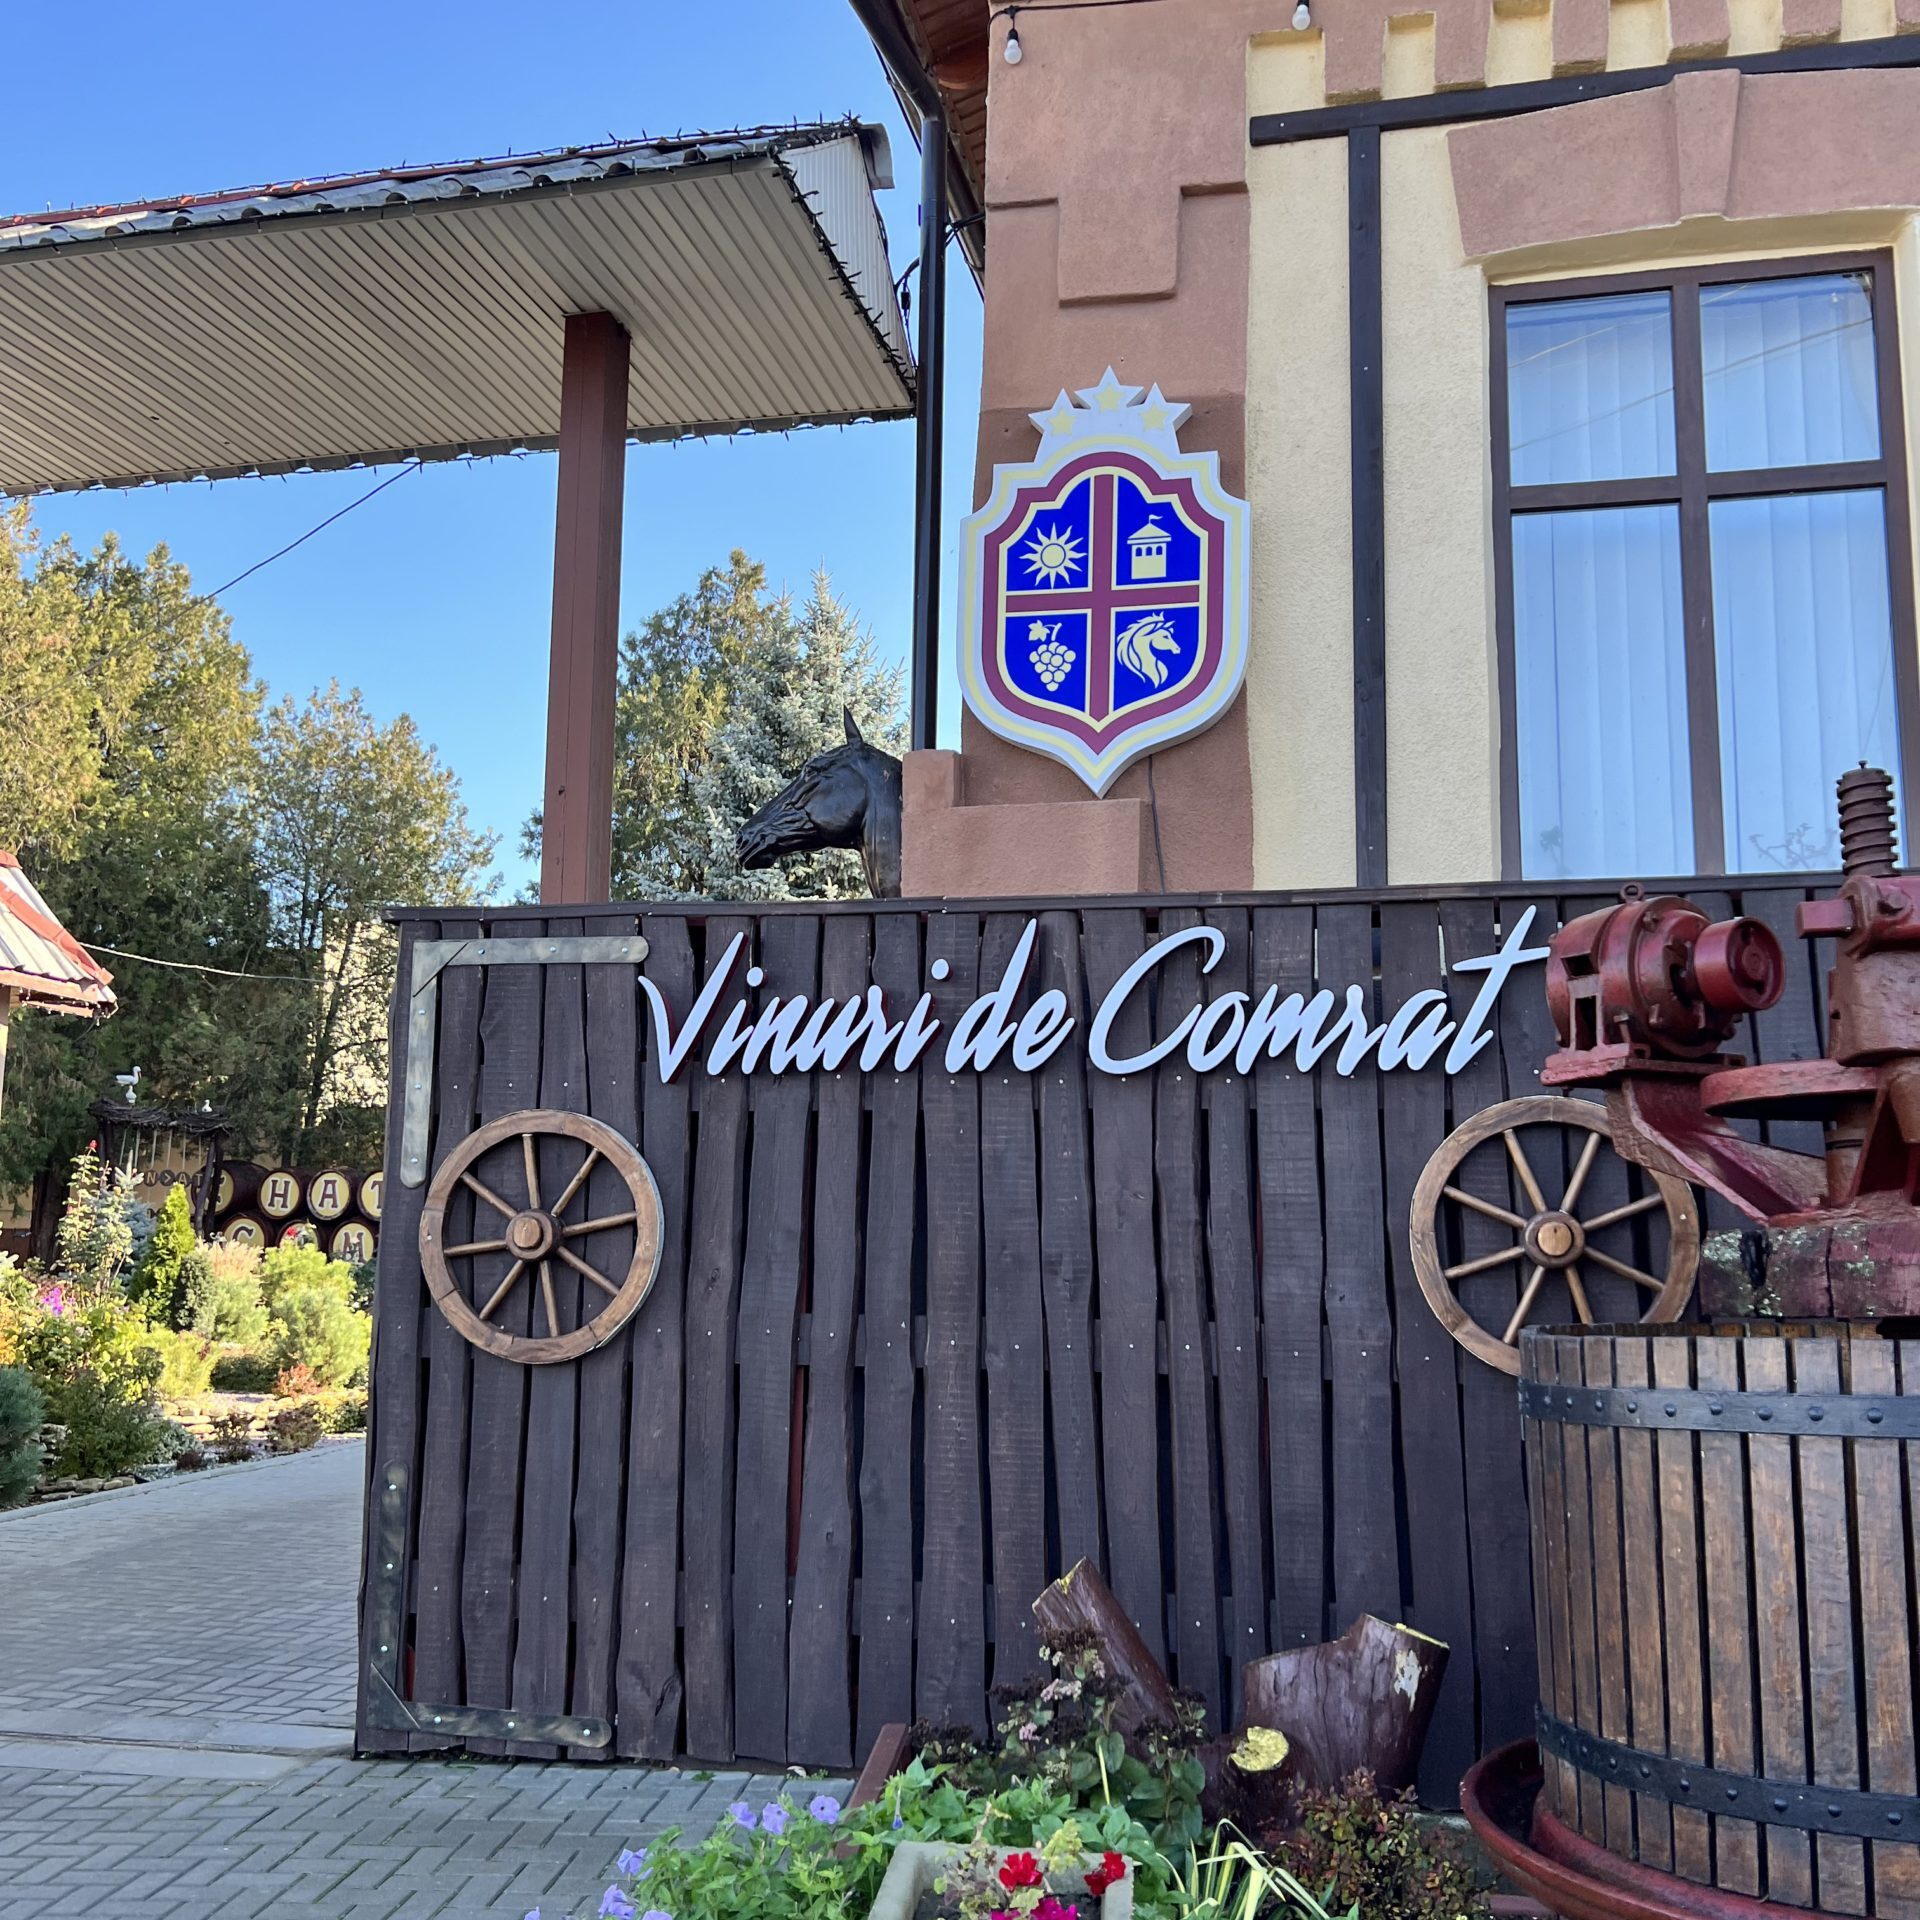 Exploring Comrat, Moldova - Colorful Traditions and Serene Surroundings